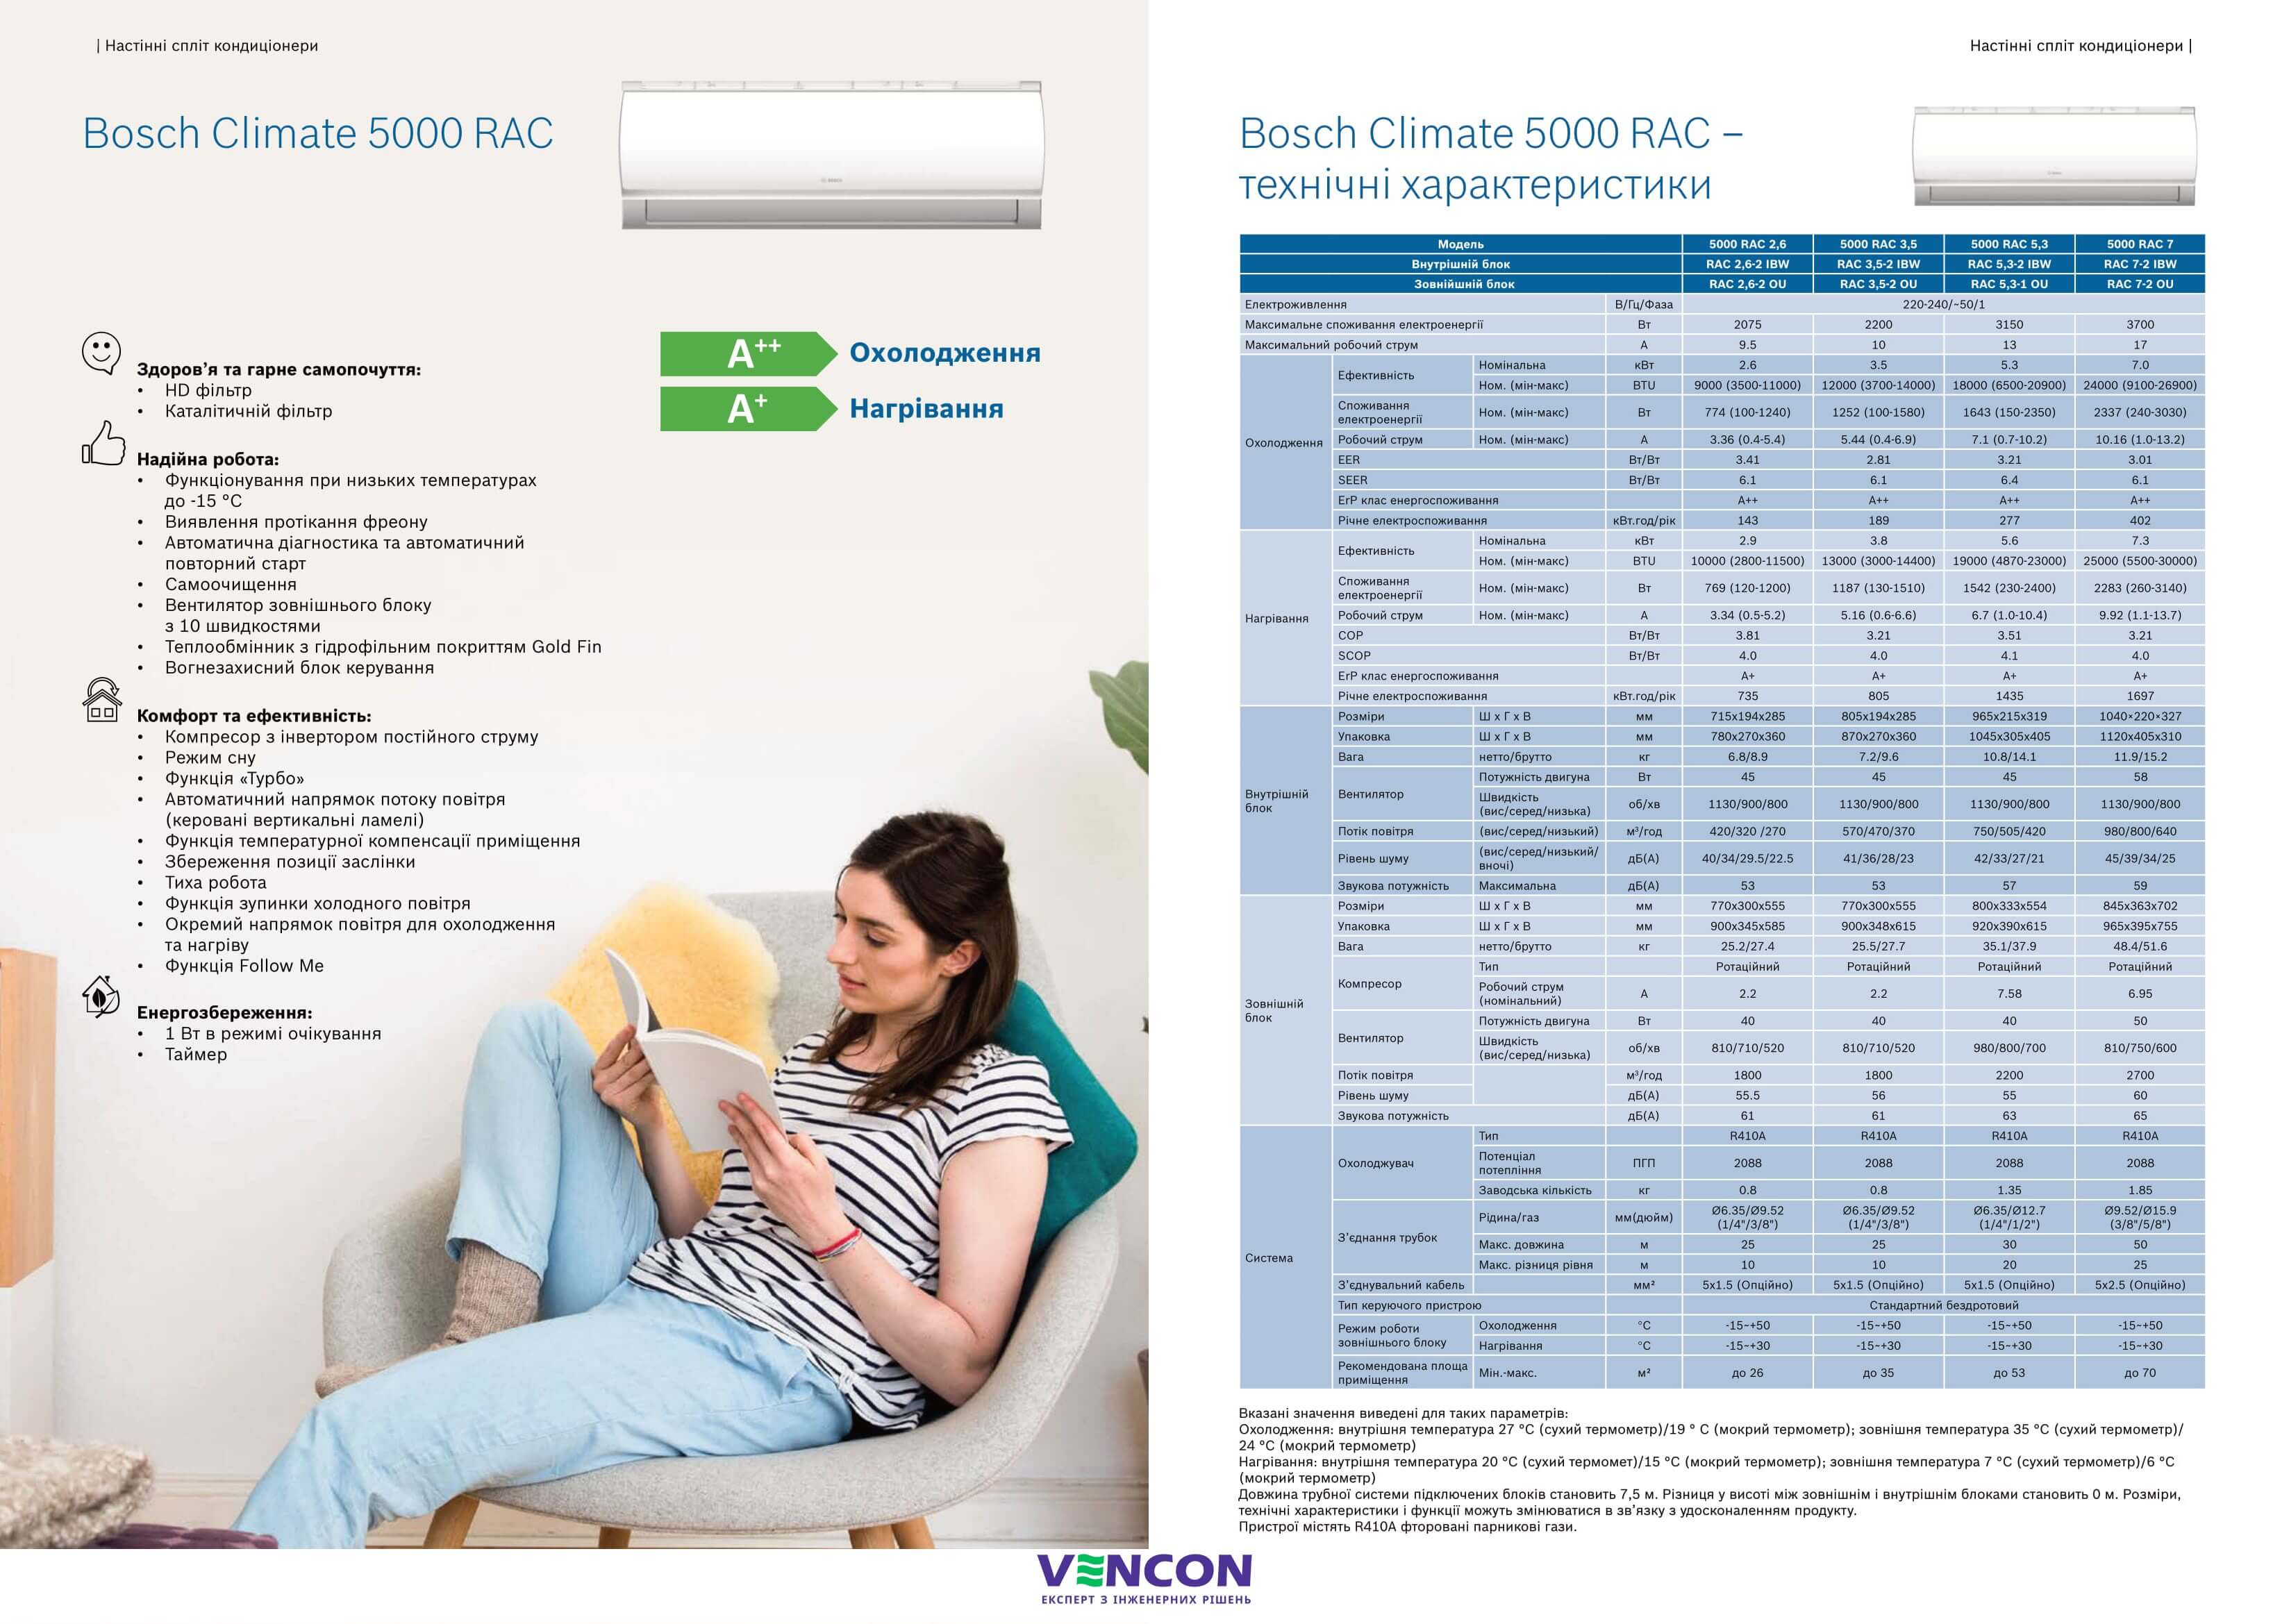 Bosch Climate 5000 RAC 2,6-2 IBW Характеристики